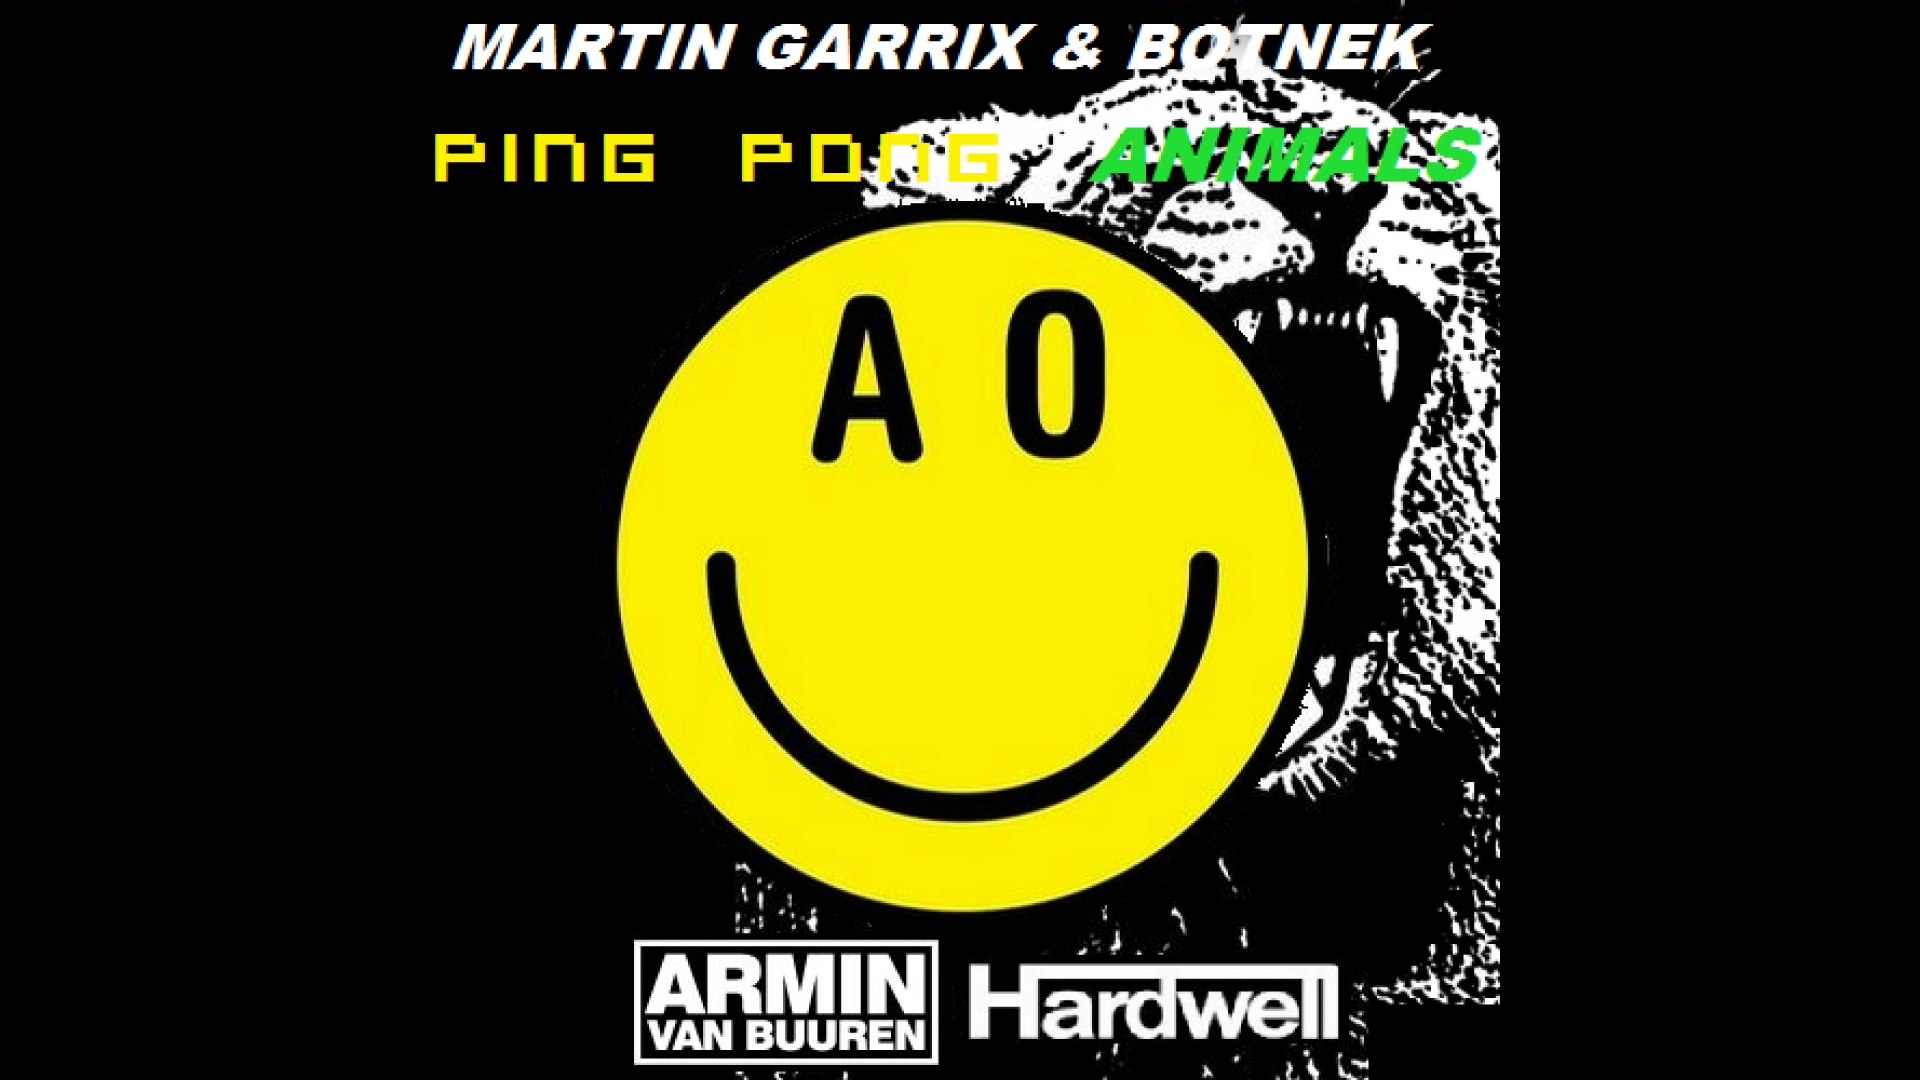 Ping pong песня. Armin van Buuren Martin Garrix. Ping Pong Armin van. Armin van Buuren - Ping Pong (Hardwell Remix). Armin van Buuren Ping Pong.